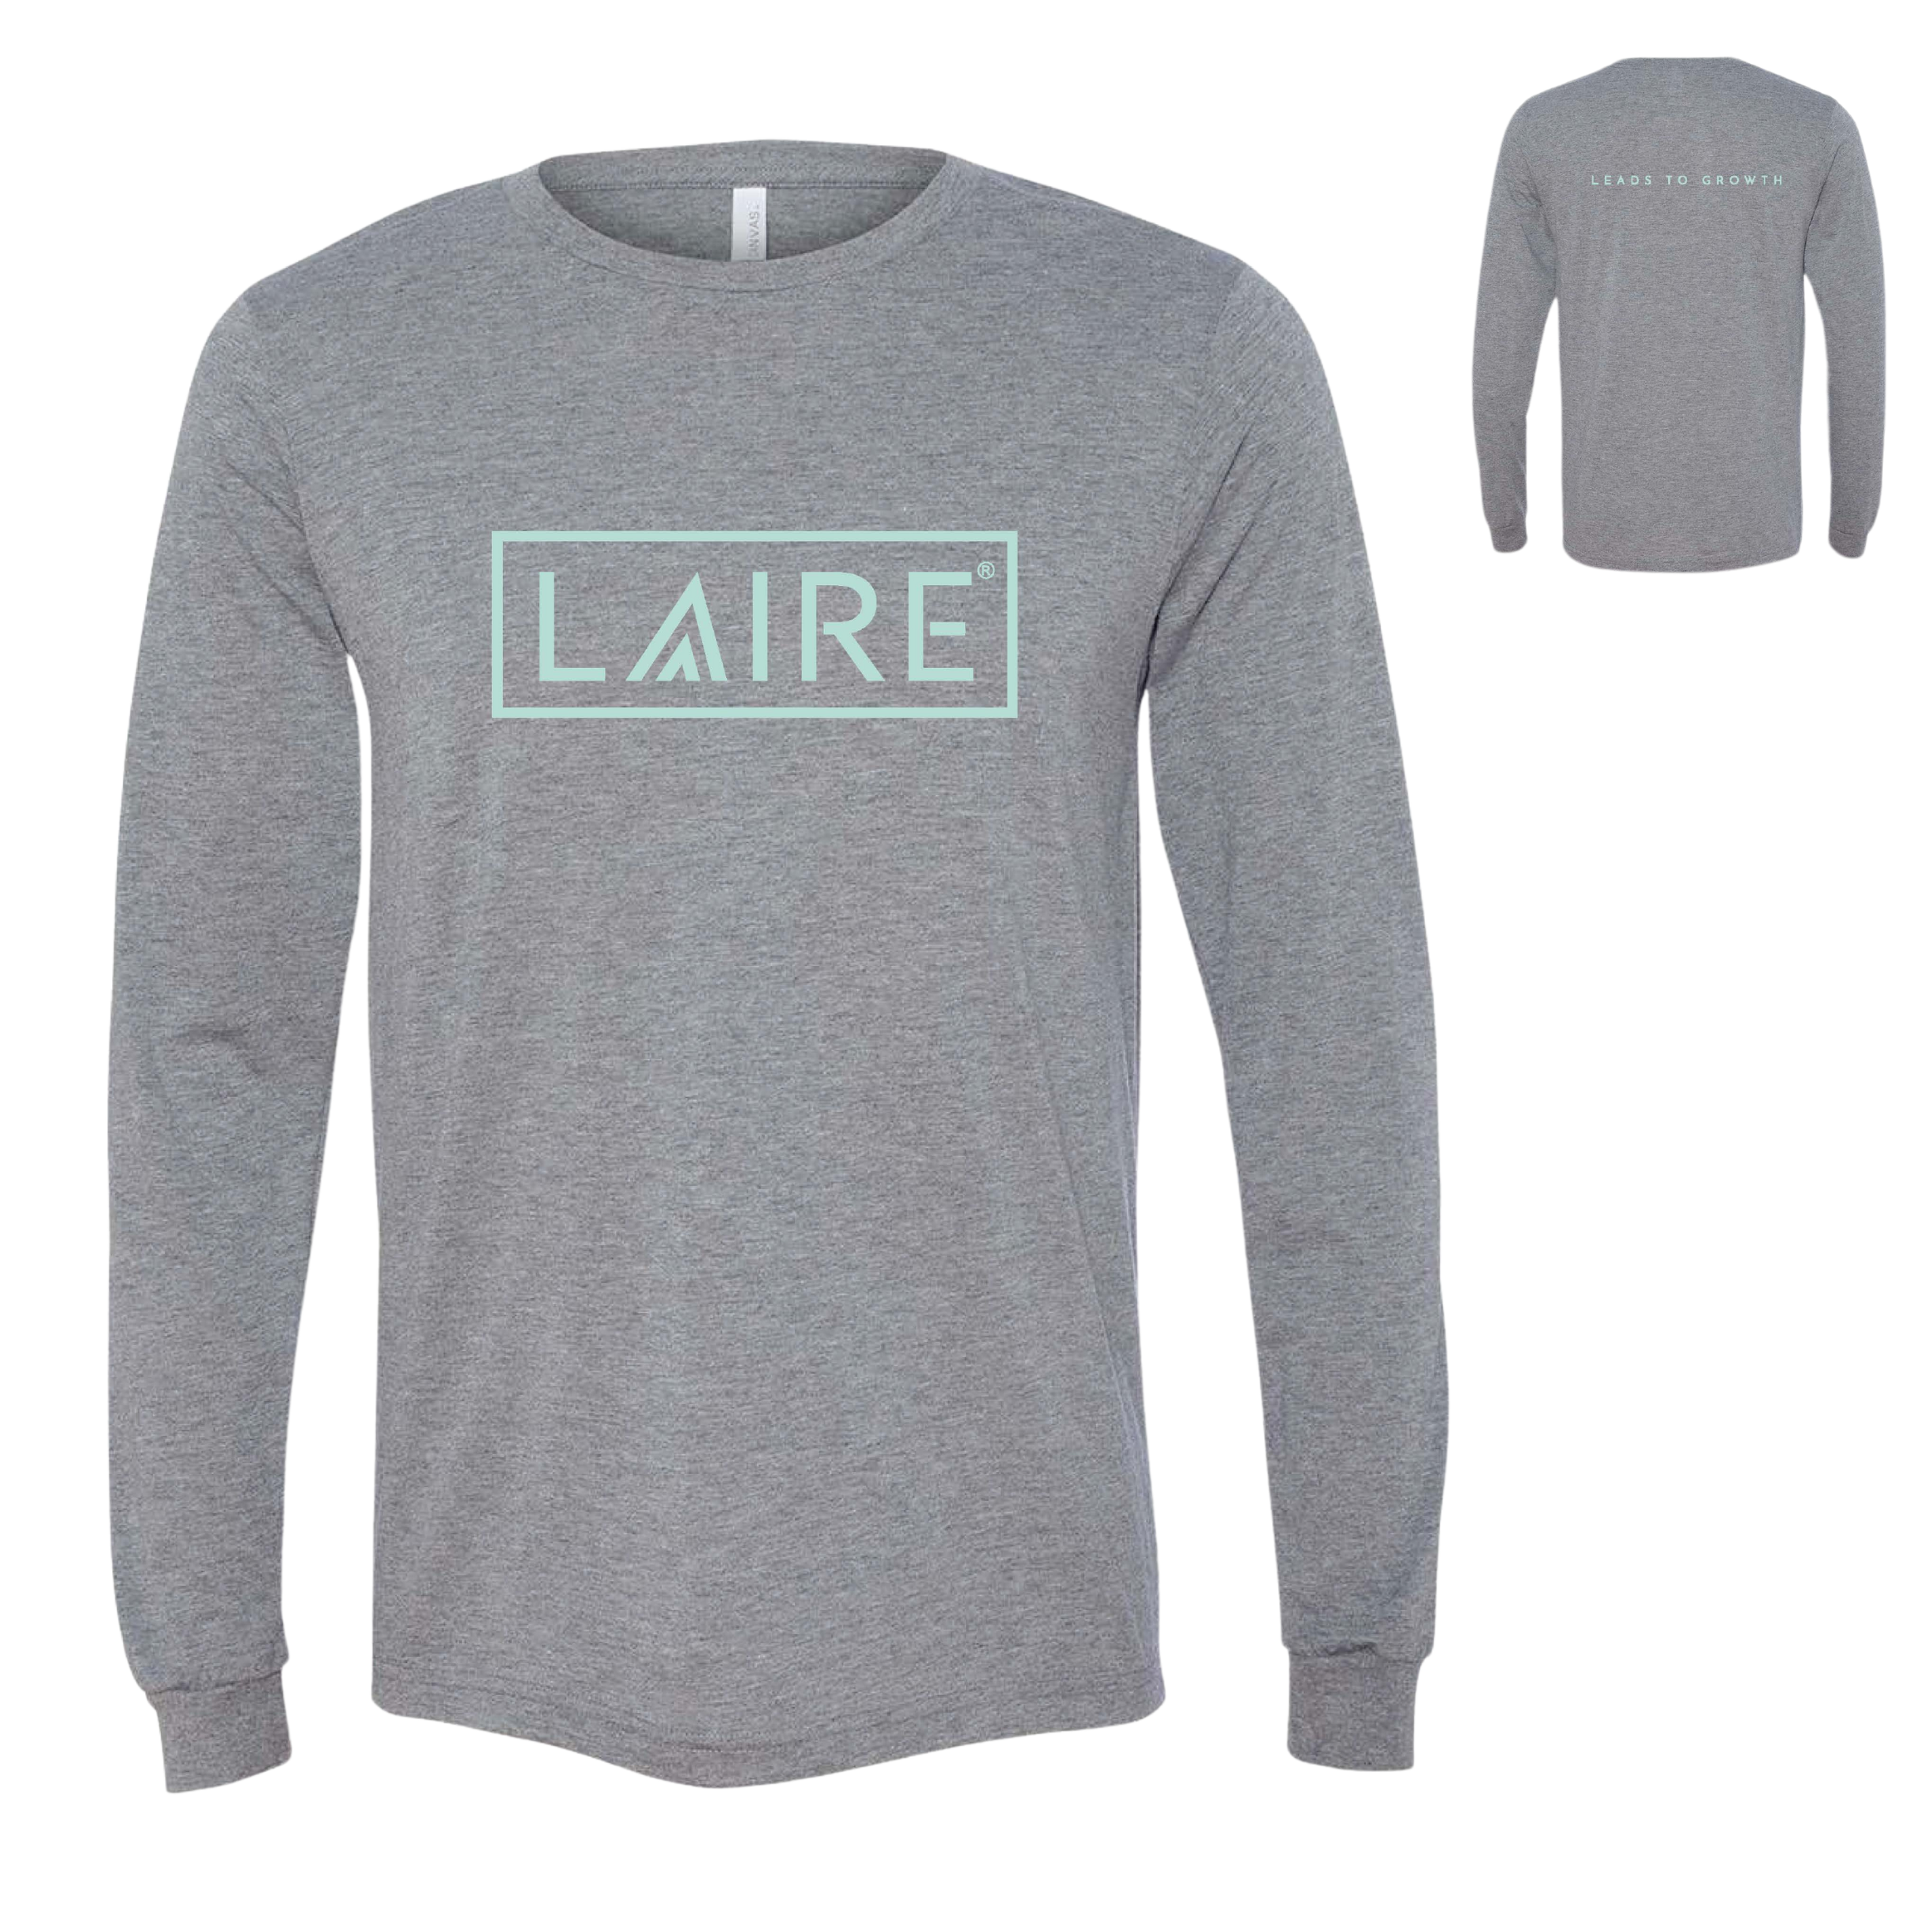 Super Soft Tri-Blend Unisex T-Shirt - Heather Grey Long Sleeve